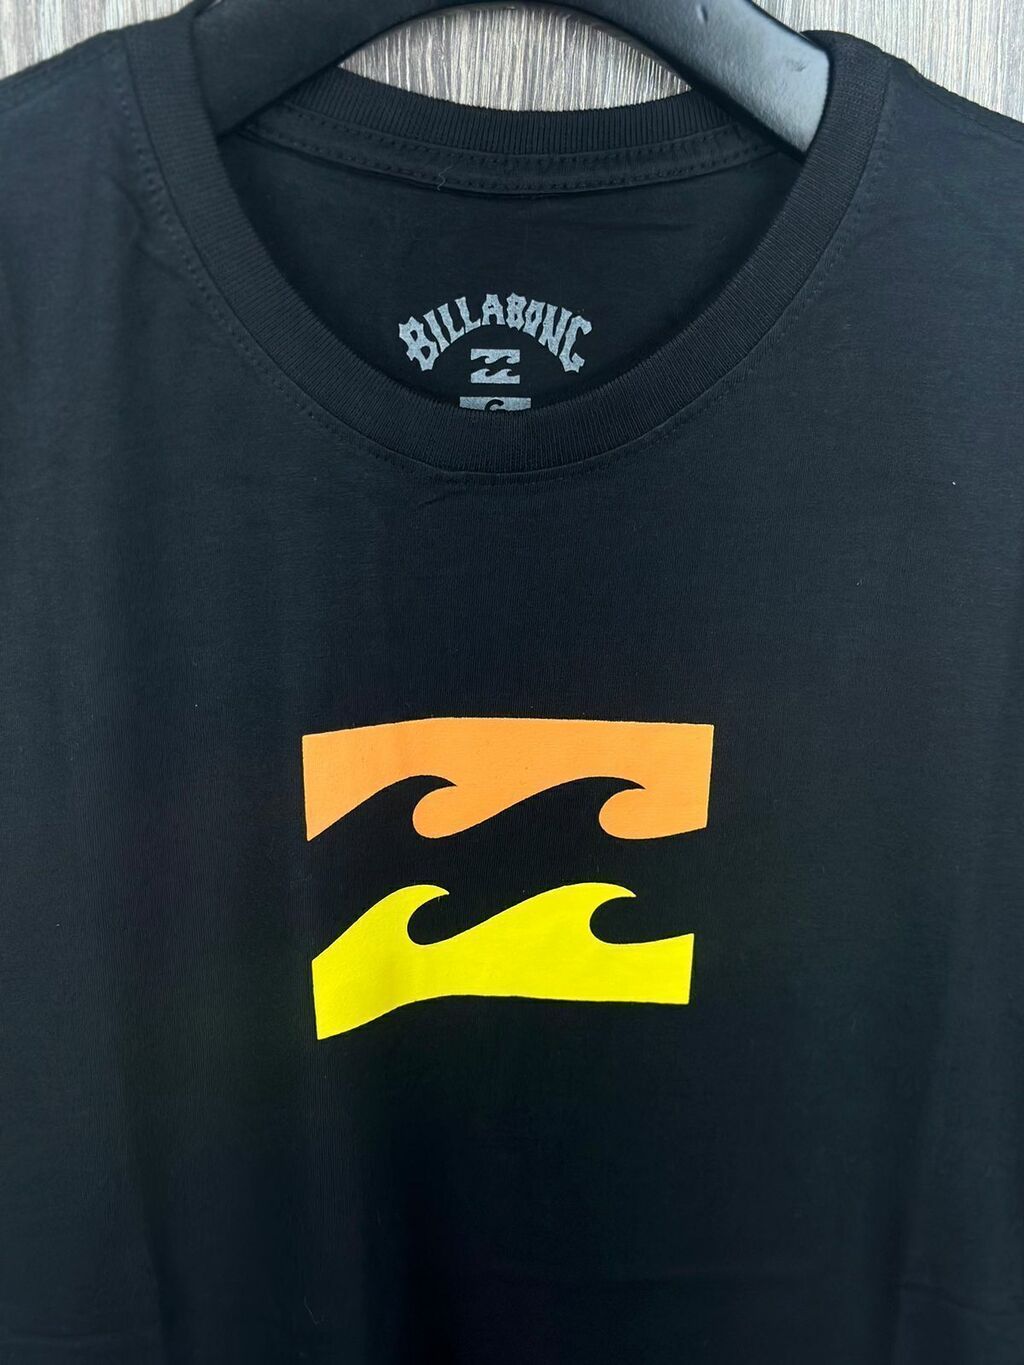 Camiseta Billabong - Preta #01 - Comprar em Street Shop